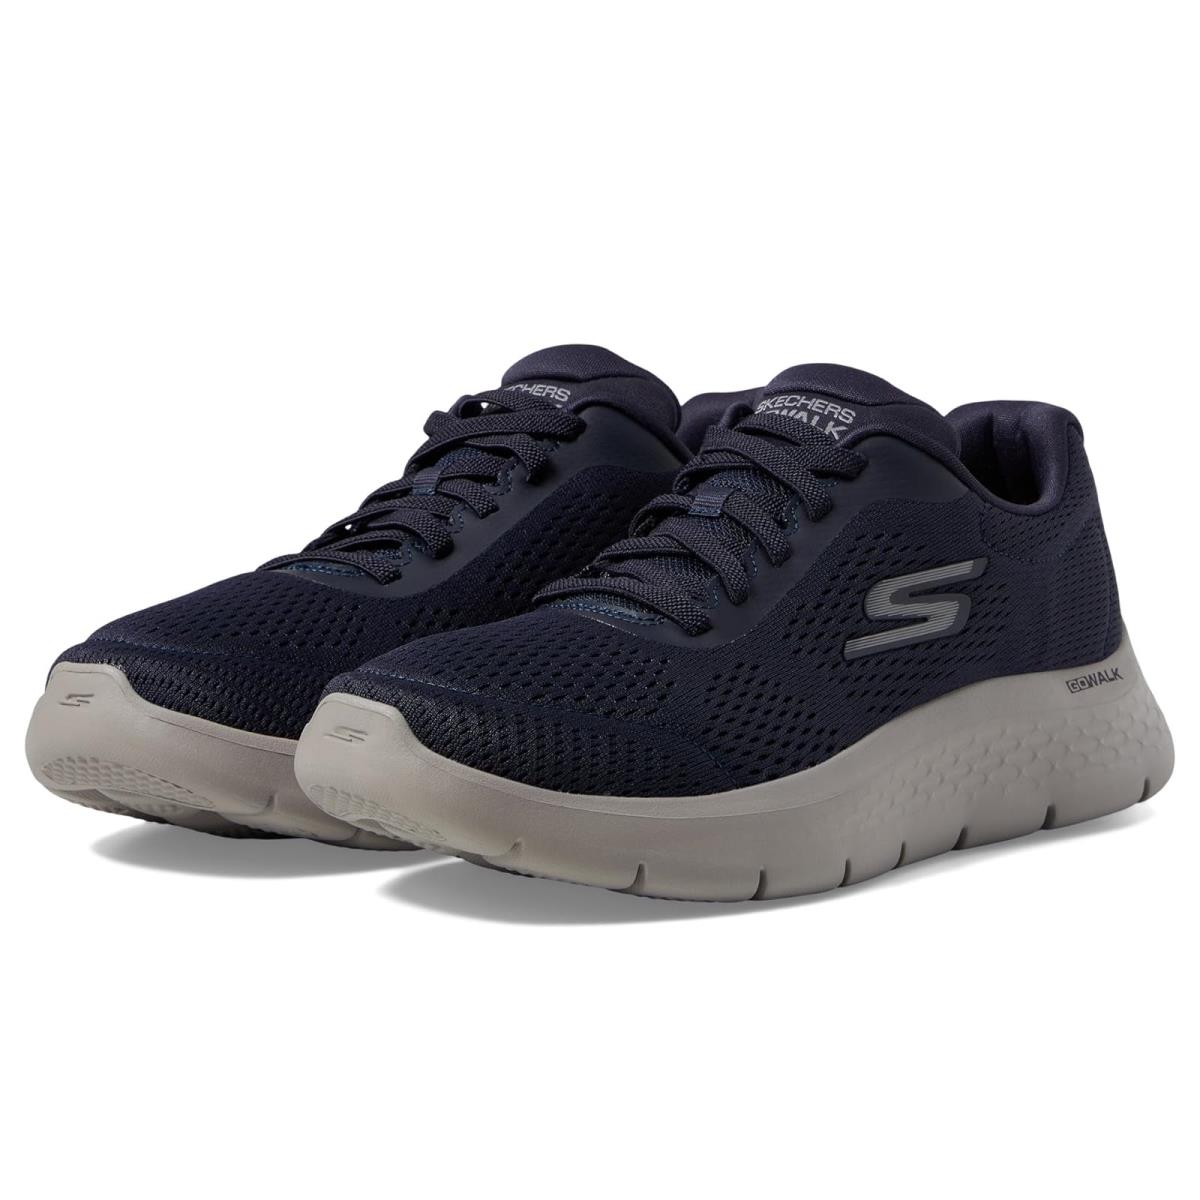 Man`s Sneakers Athletic Shoes Skechers Performance Go Walk Flex - Remark Navy/Grey